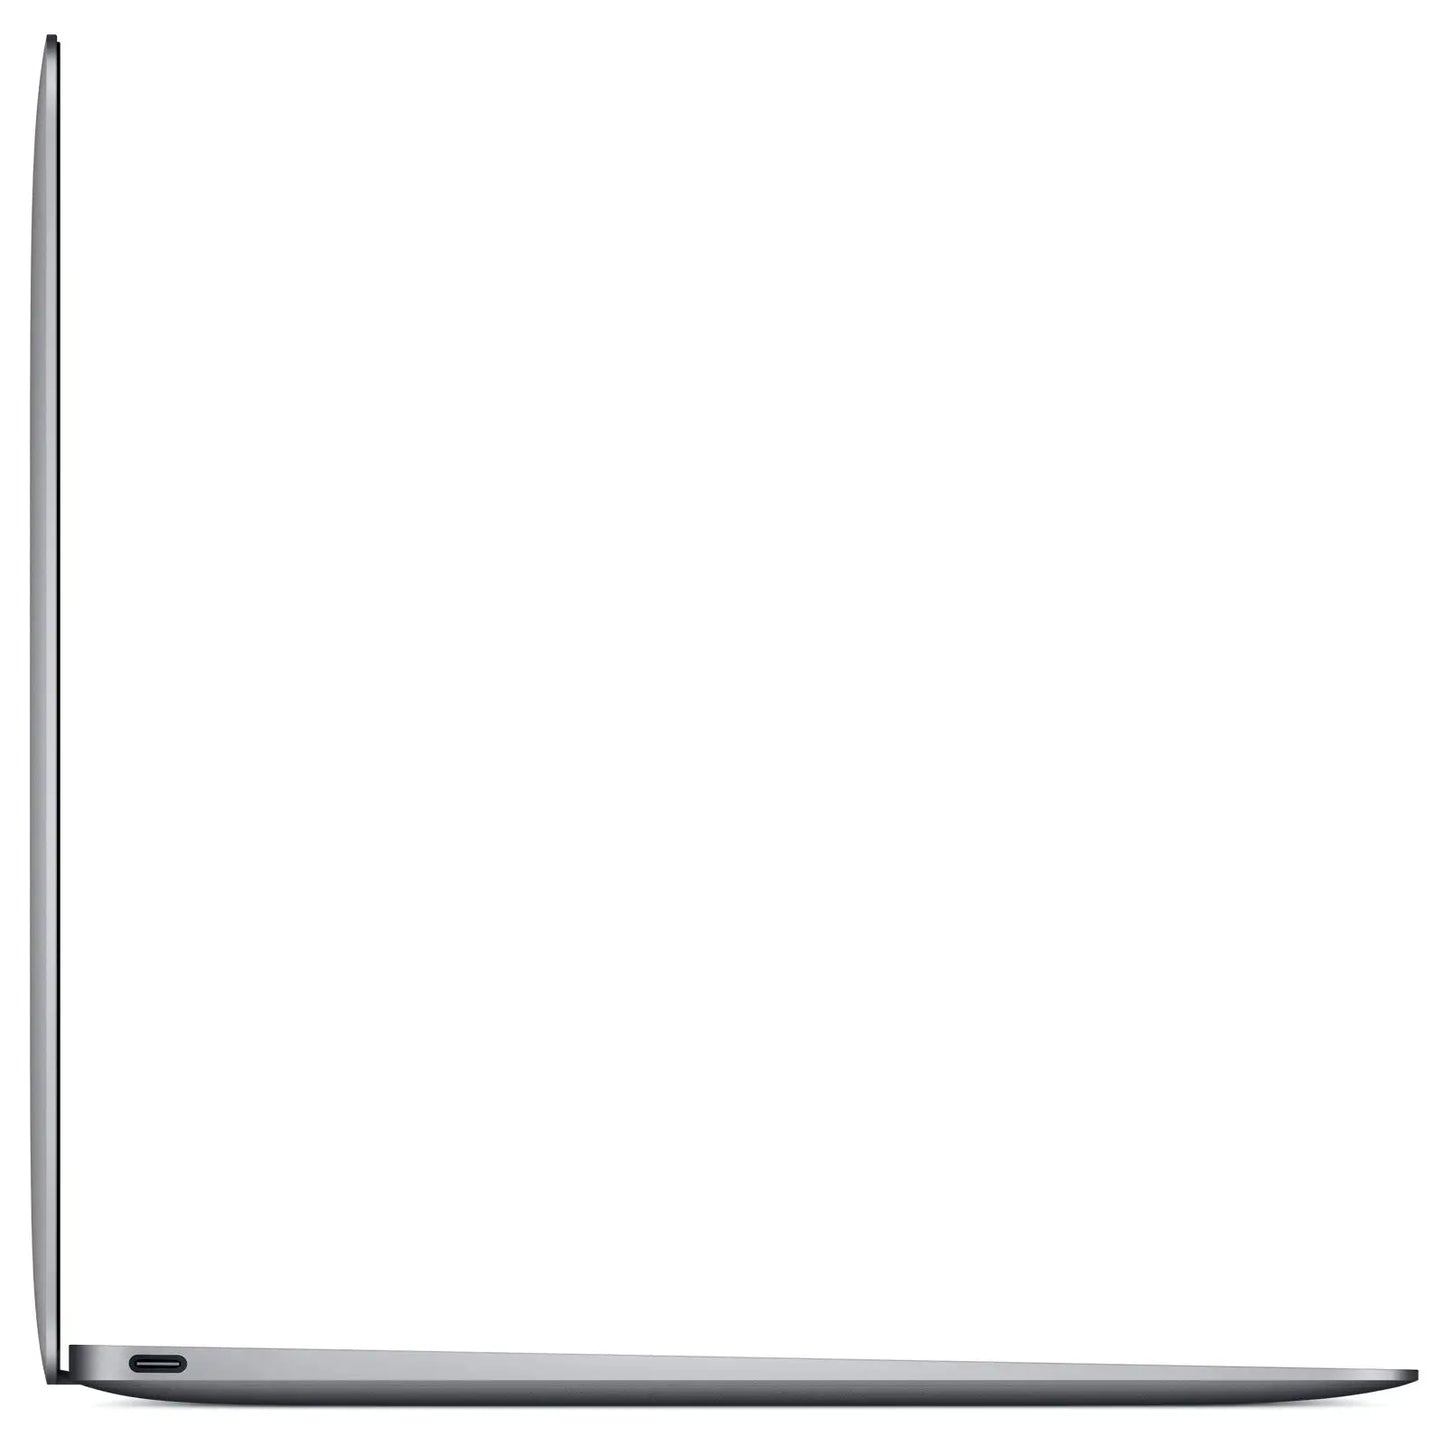 Apple MacBook 12" 256 Go SSD 8 Go RAM Intel  à 1.2 GHz  MNYF2FN/A 0190198202444 Apple Computer, Inc